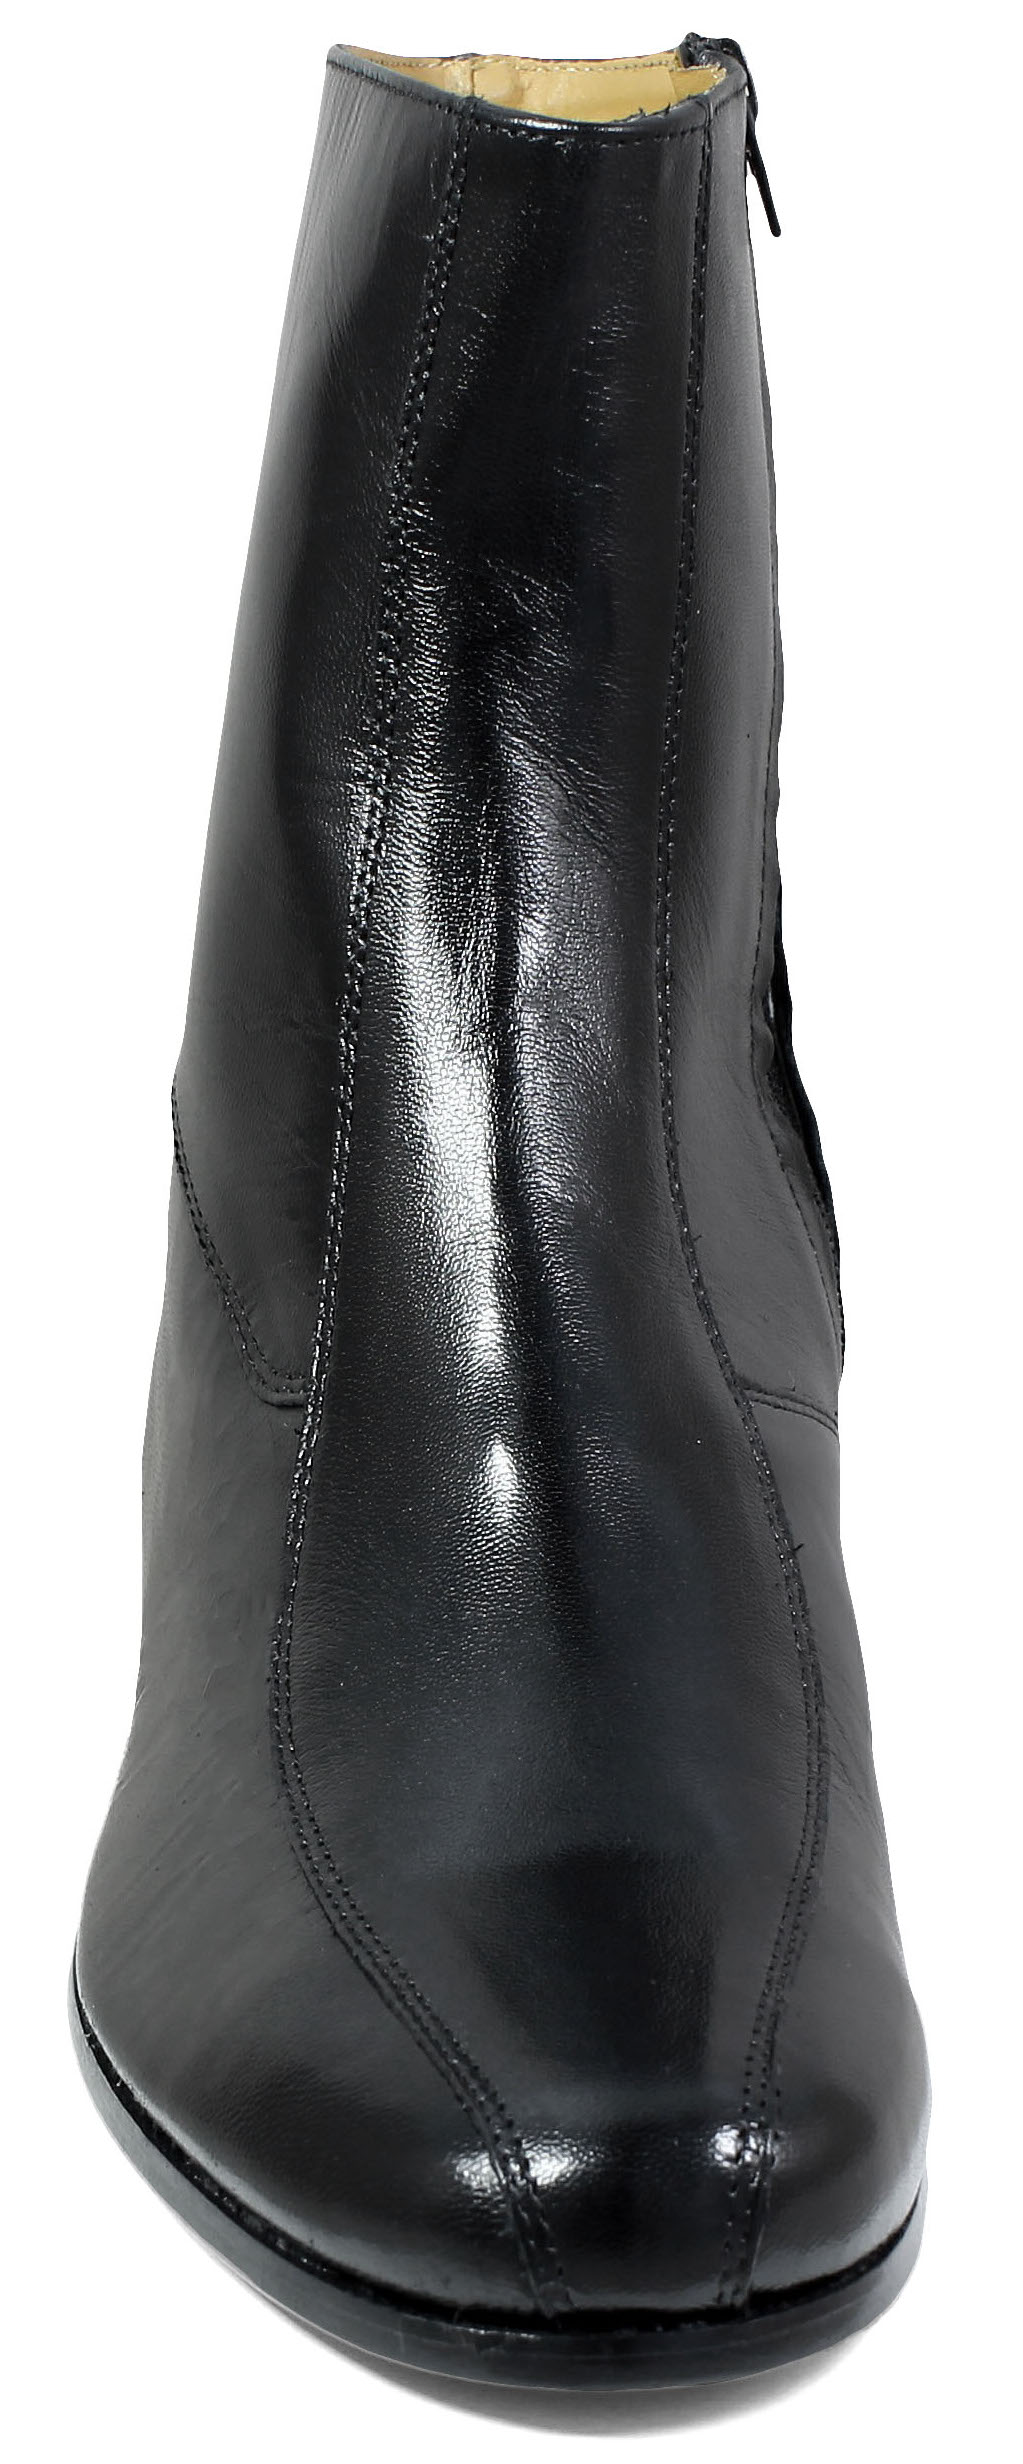 Nunn Bush Men's Bristol (Black) Side Zip Dress Boot